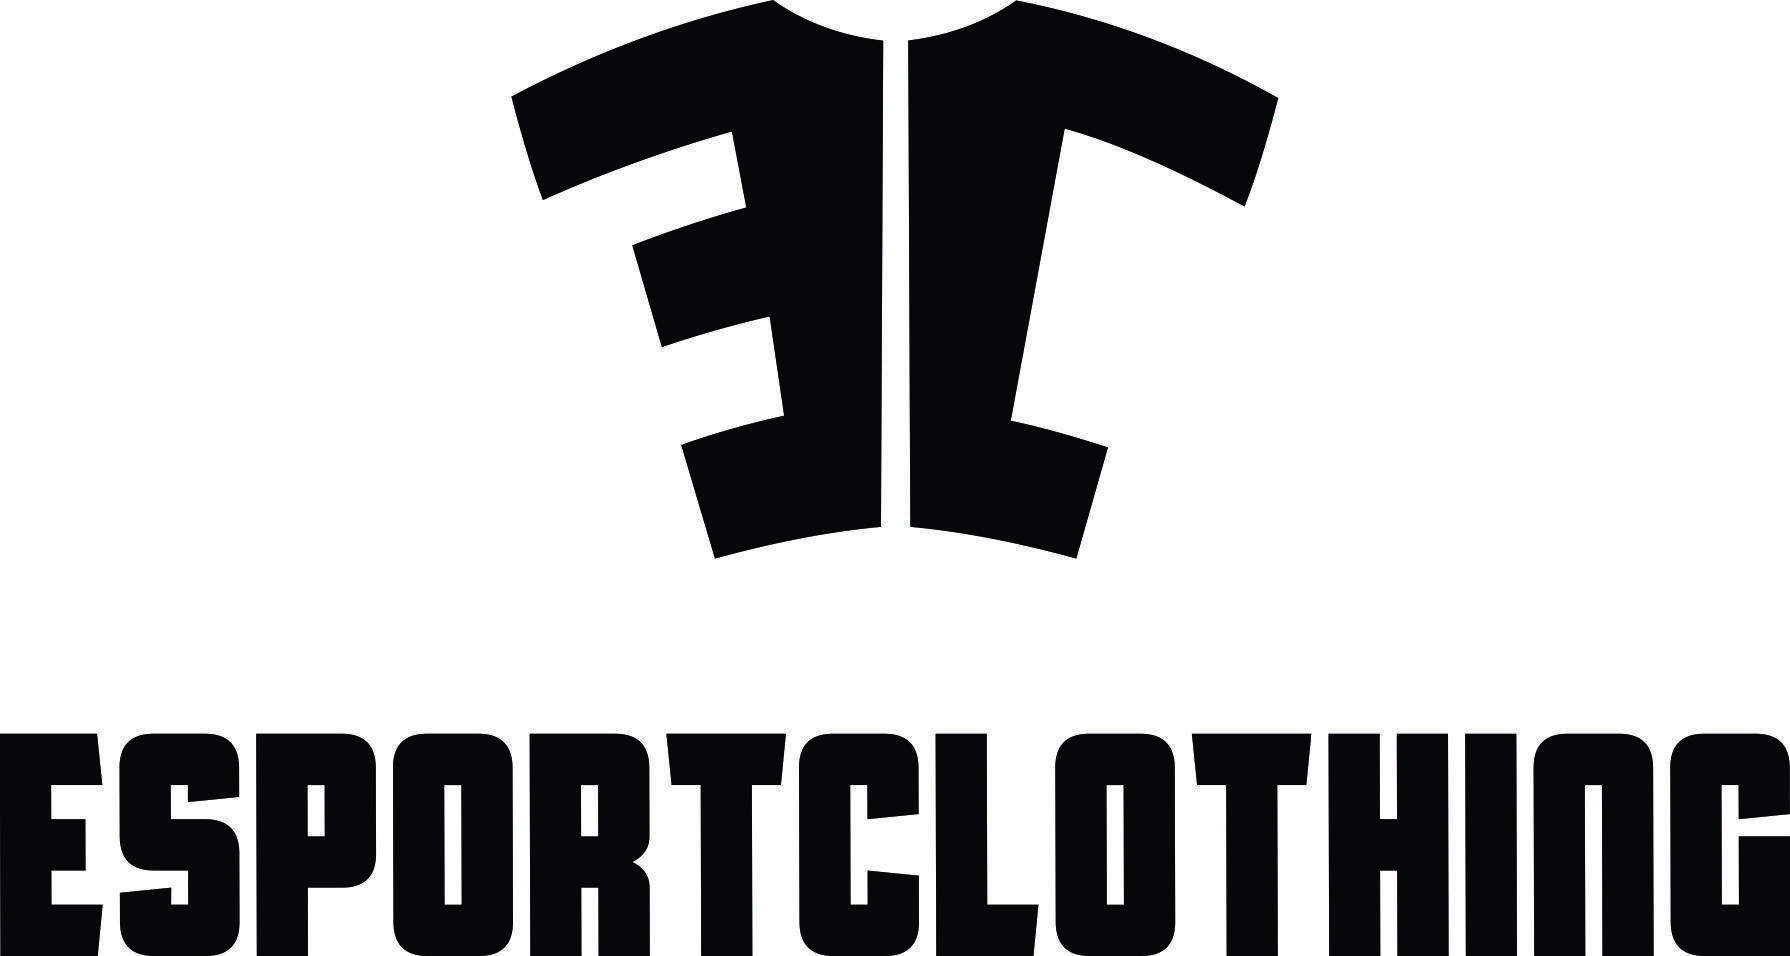 Bottom Logo - Logo's and Banners - Esportclothing